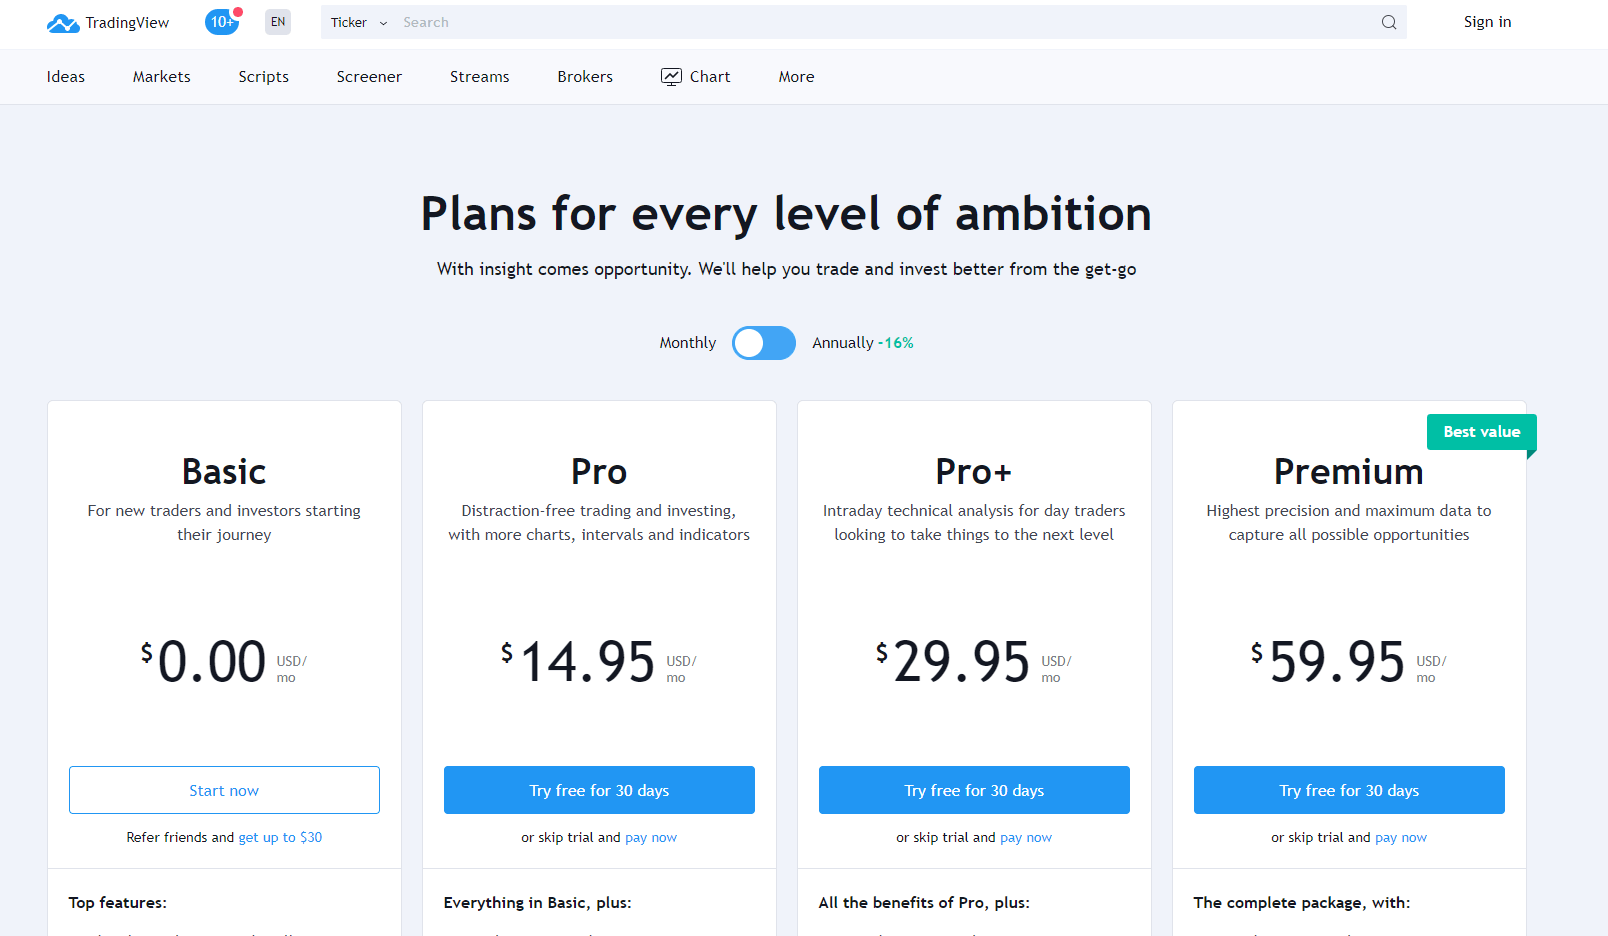 TradingView, it offers Basic, Pro, Pro+, and Premium multi-tier subscription plans